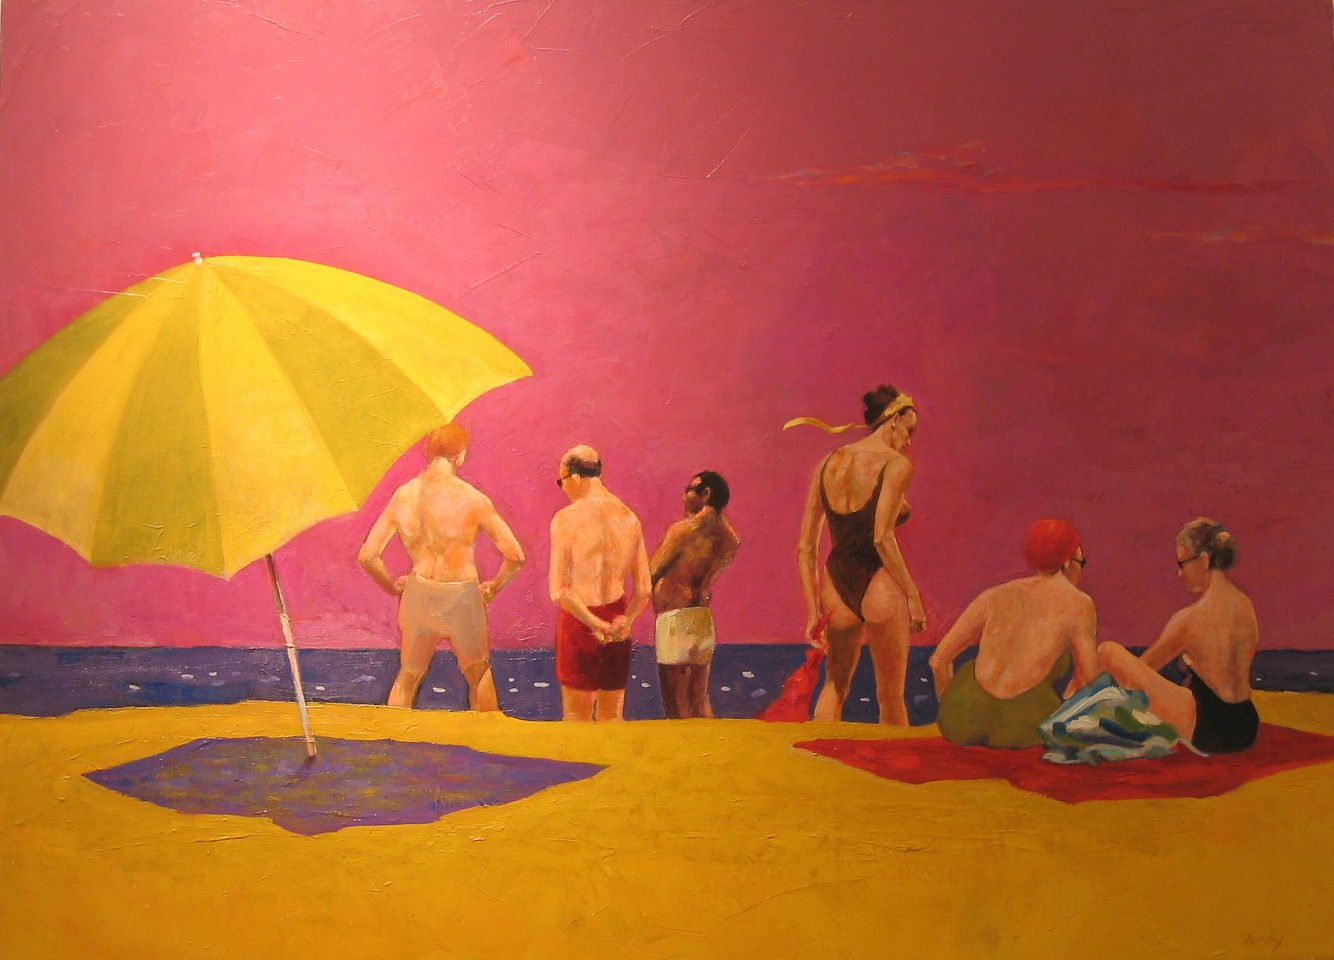 John Hardy, Atlantic Beach Moment, 1999
Oil on Canvas, 42 x 56 inches
HARD0010